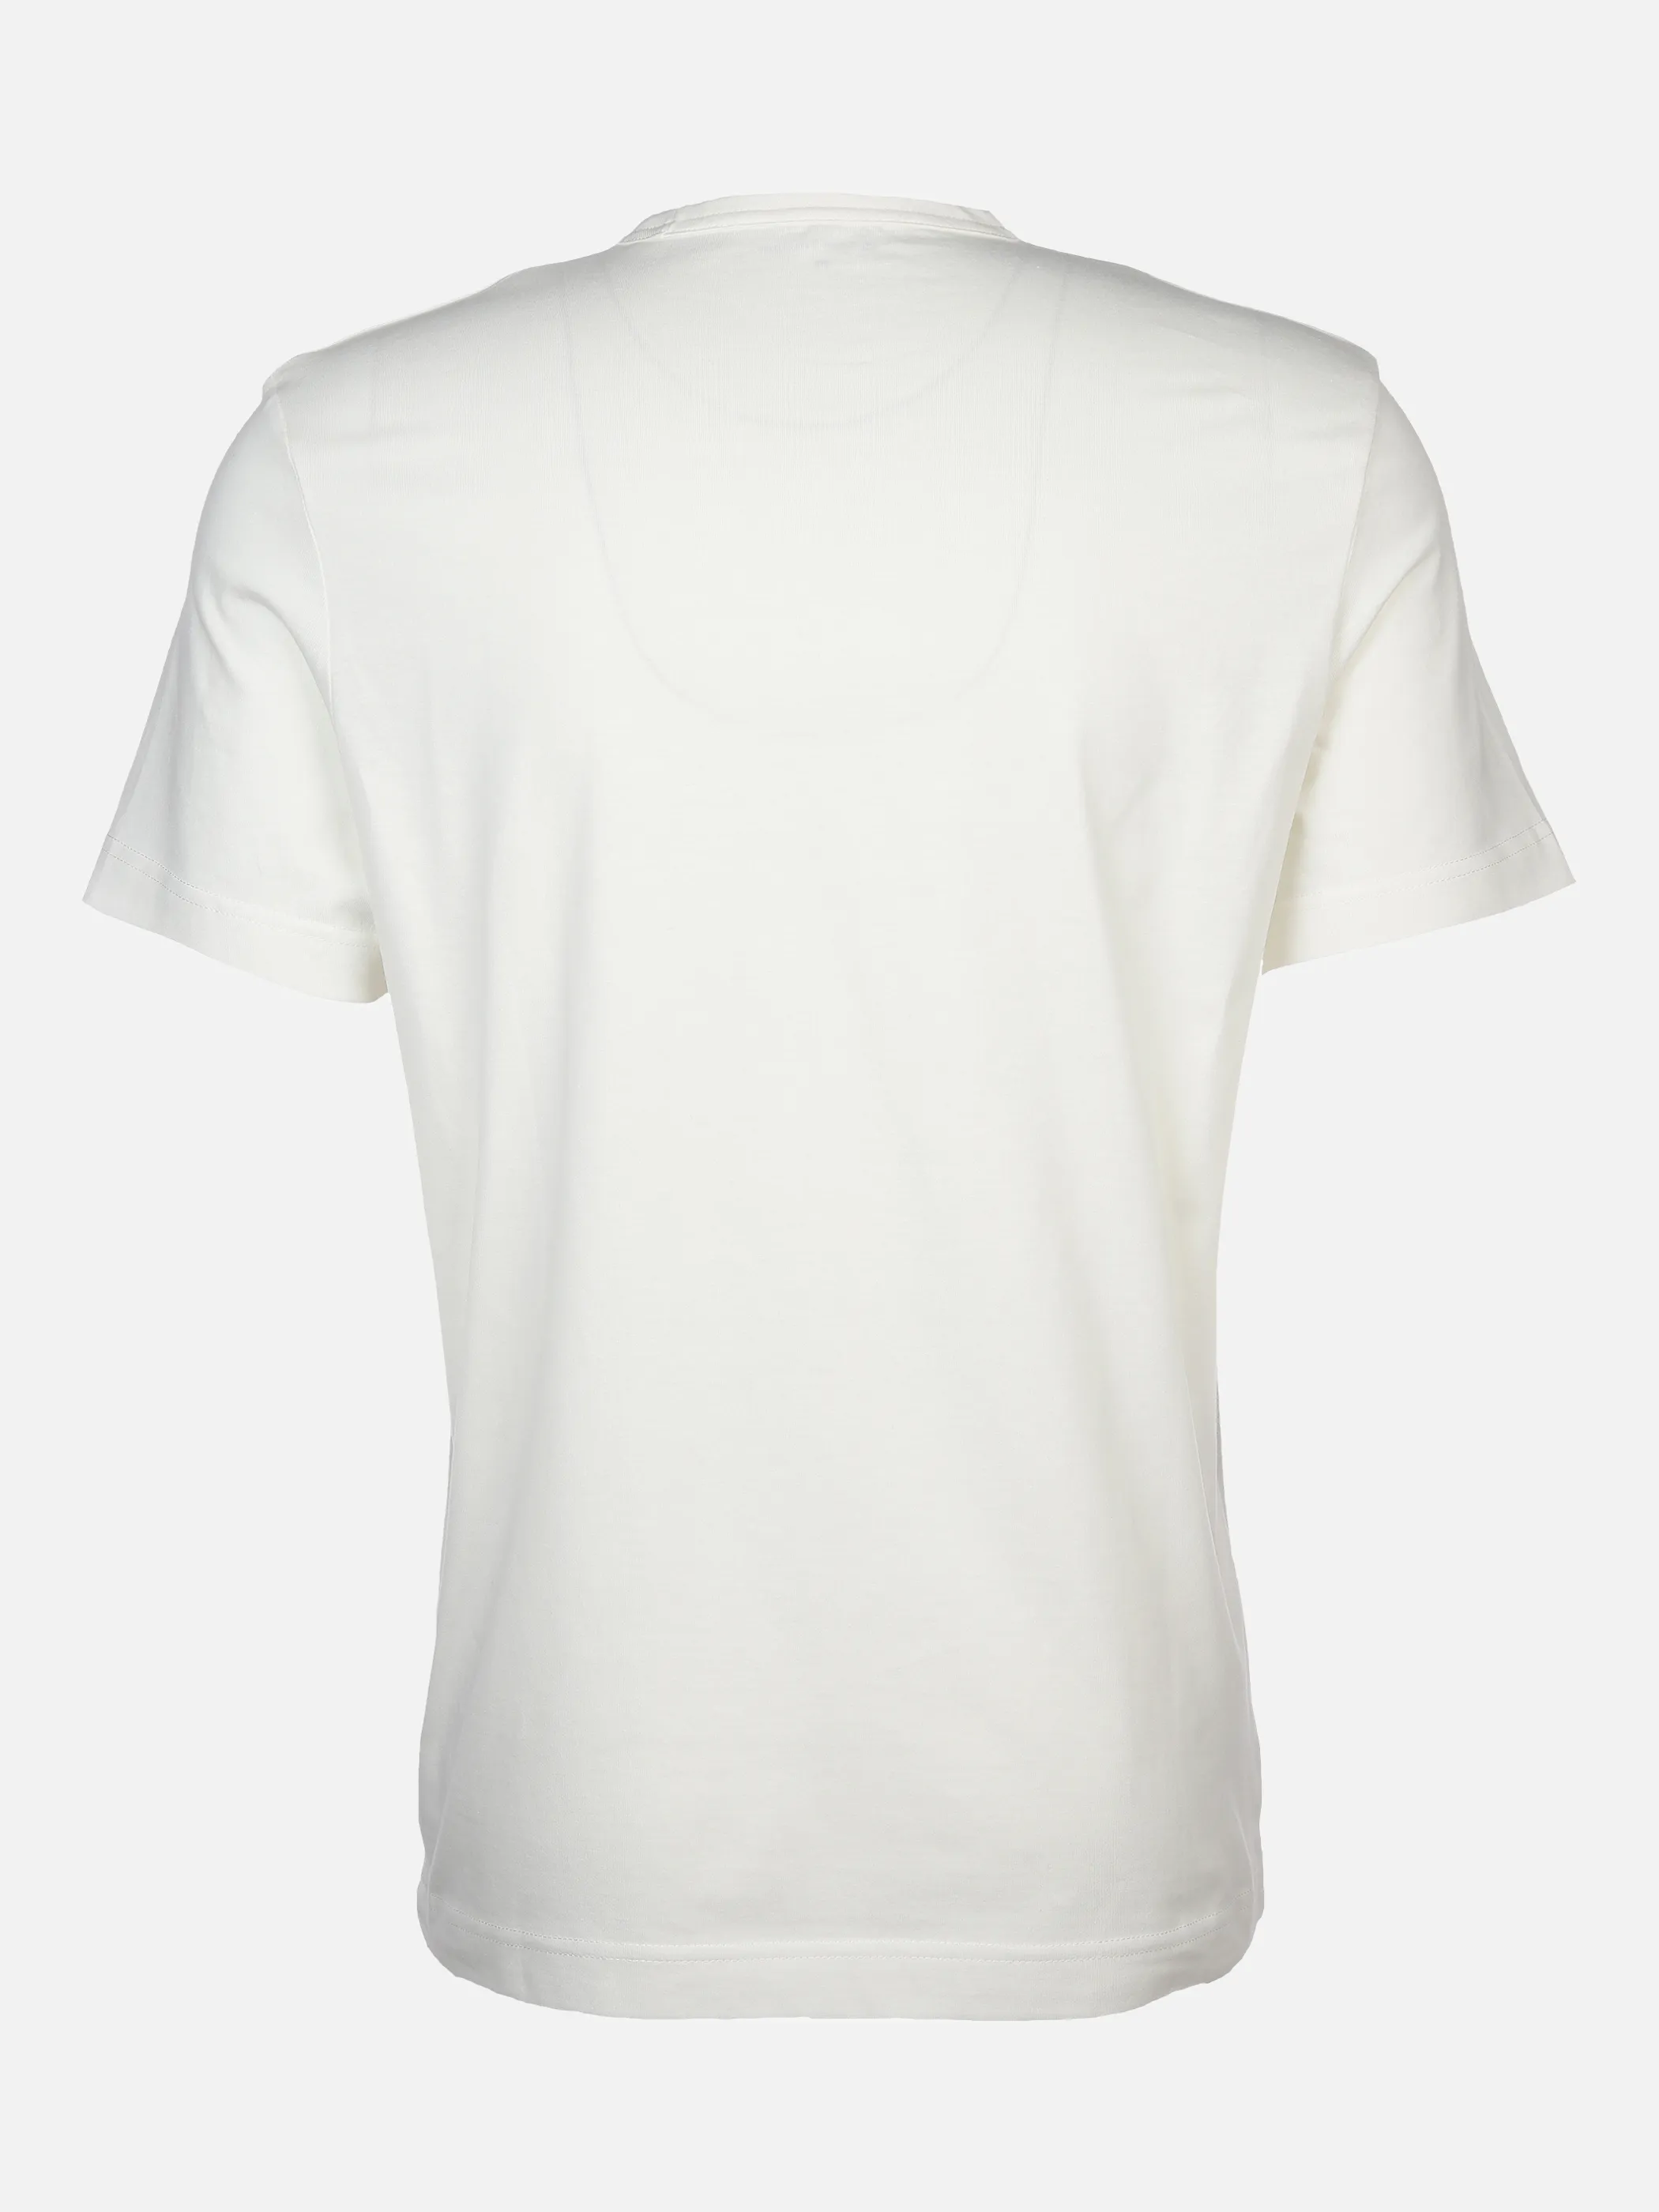 Tom Tailor 1036328 printed t-shirt Weiß 880546 10332 2